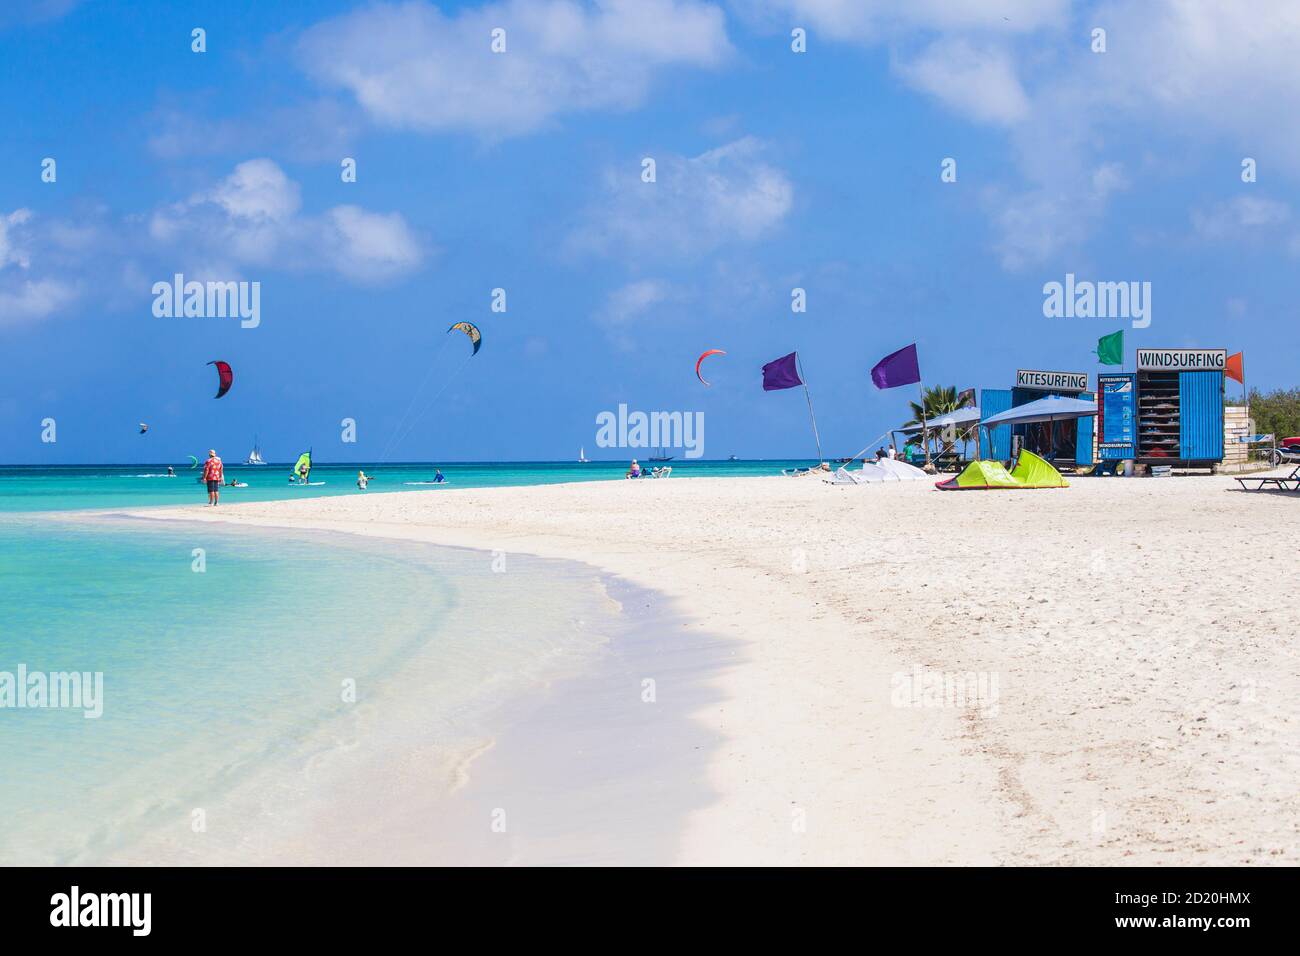 Caribbean, Netherland Antilles, Aruba, Hadicurari beach, Windsurfing and kitesufing huts Stock Photo